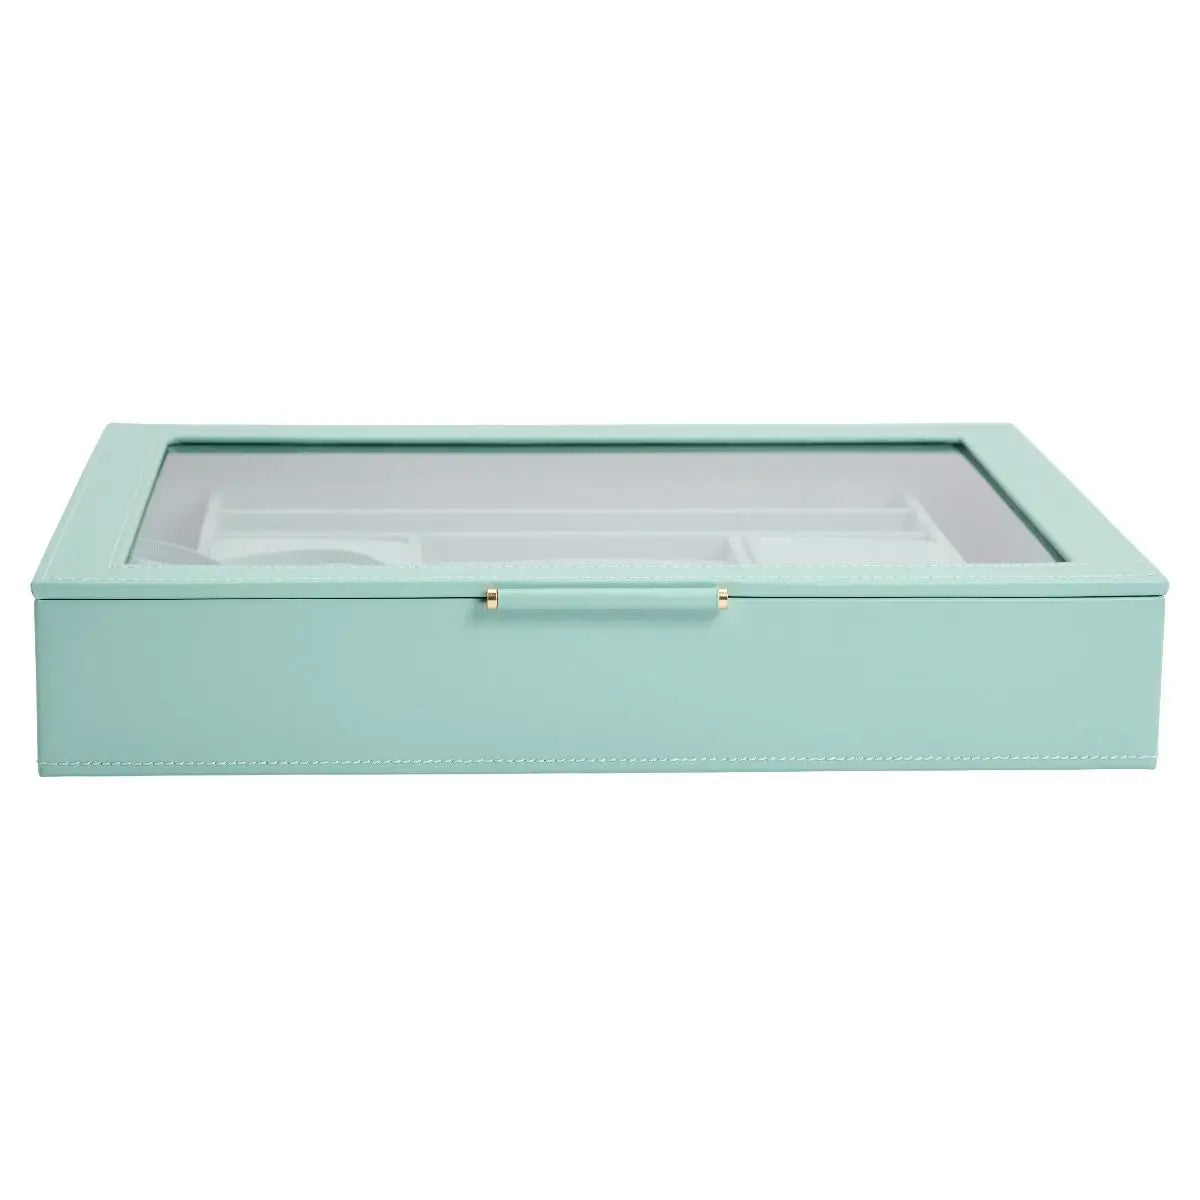 Sophia Jewelry Box with Window - Squash Blossom Vail